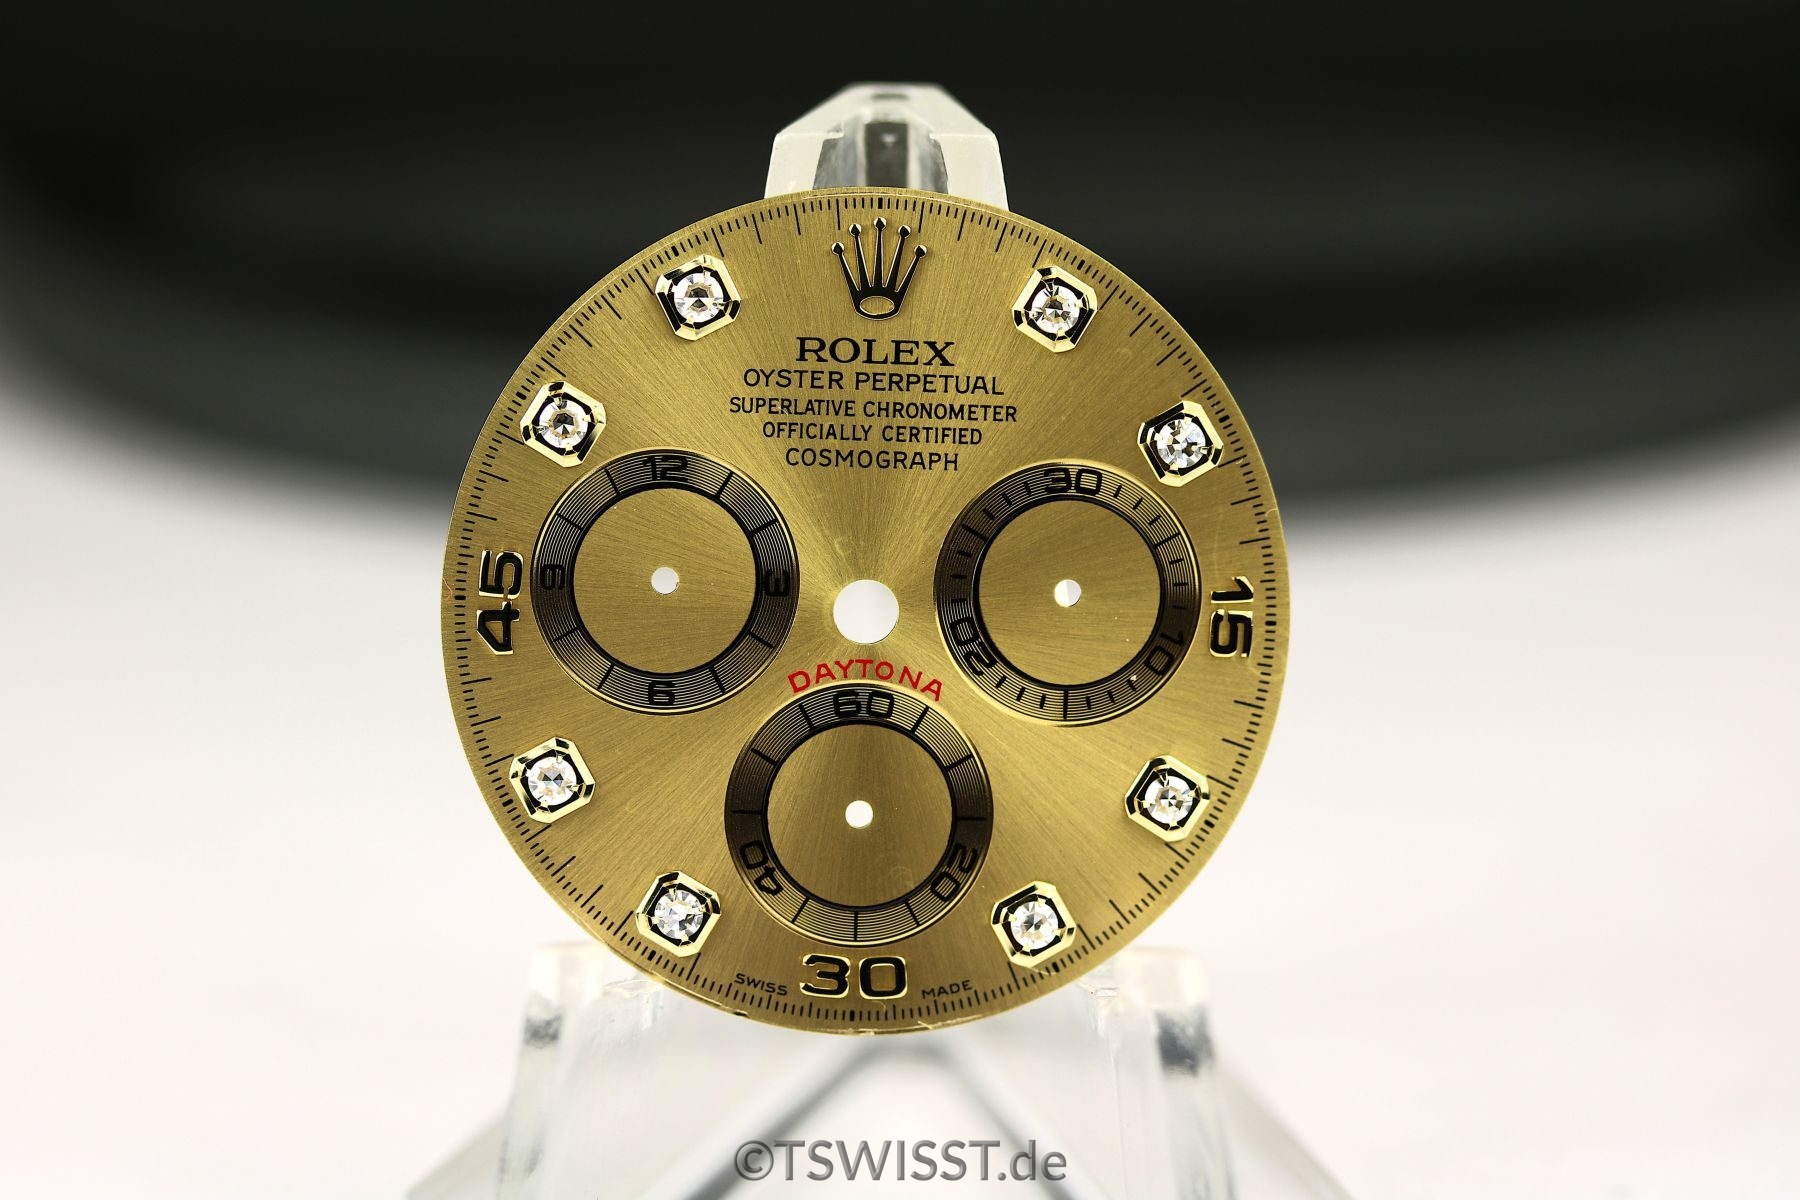 Rolex Daytona dial